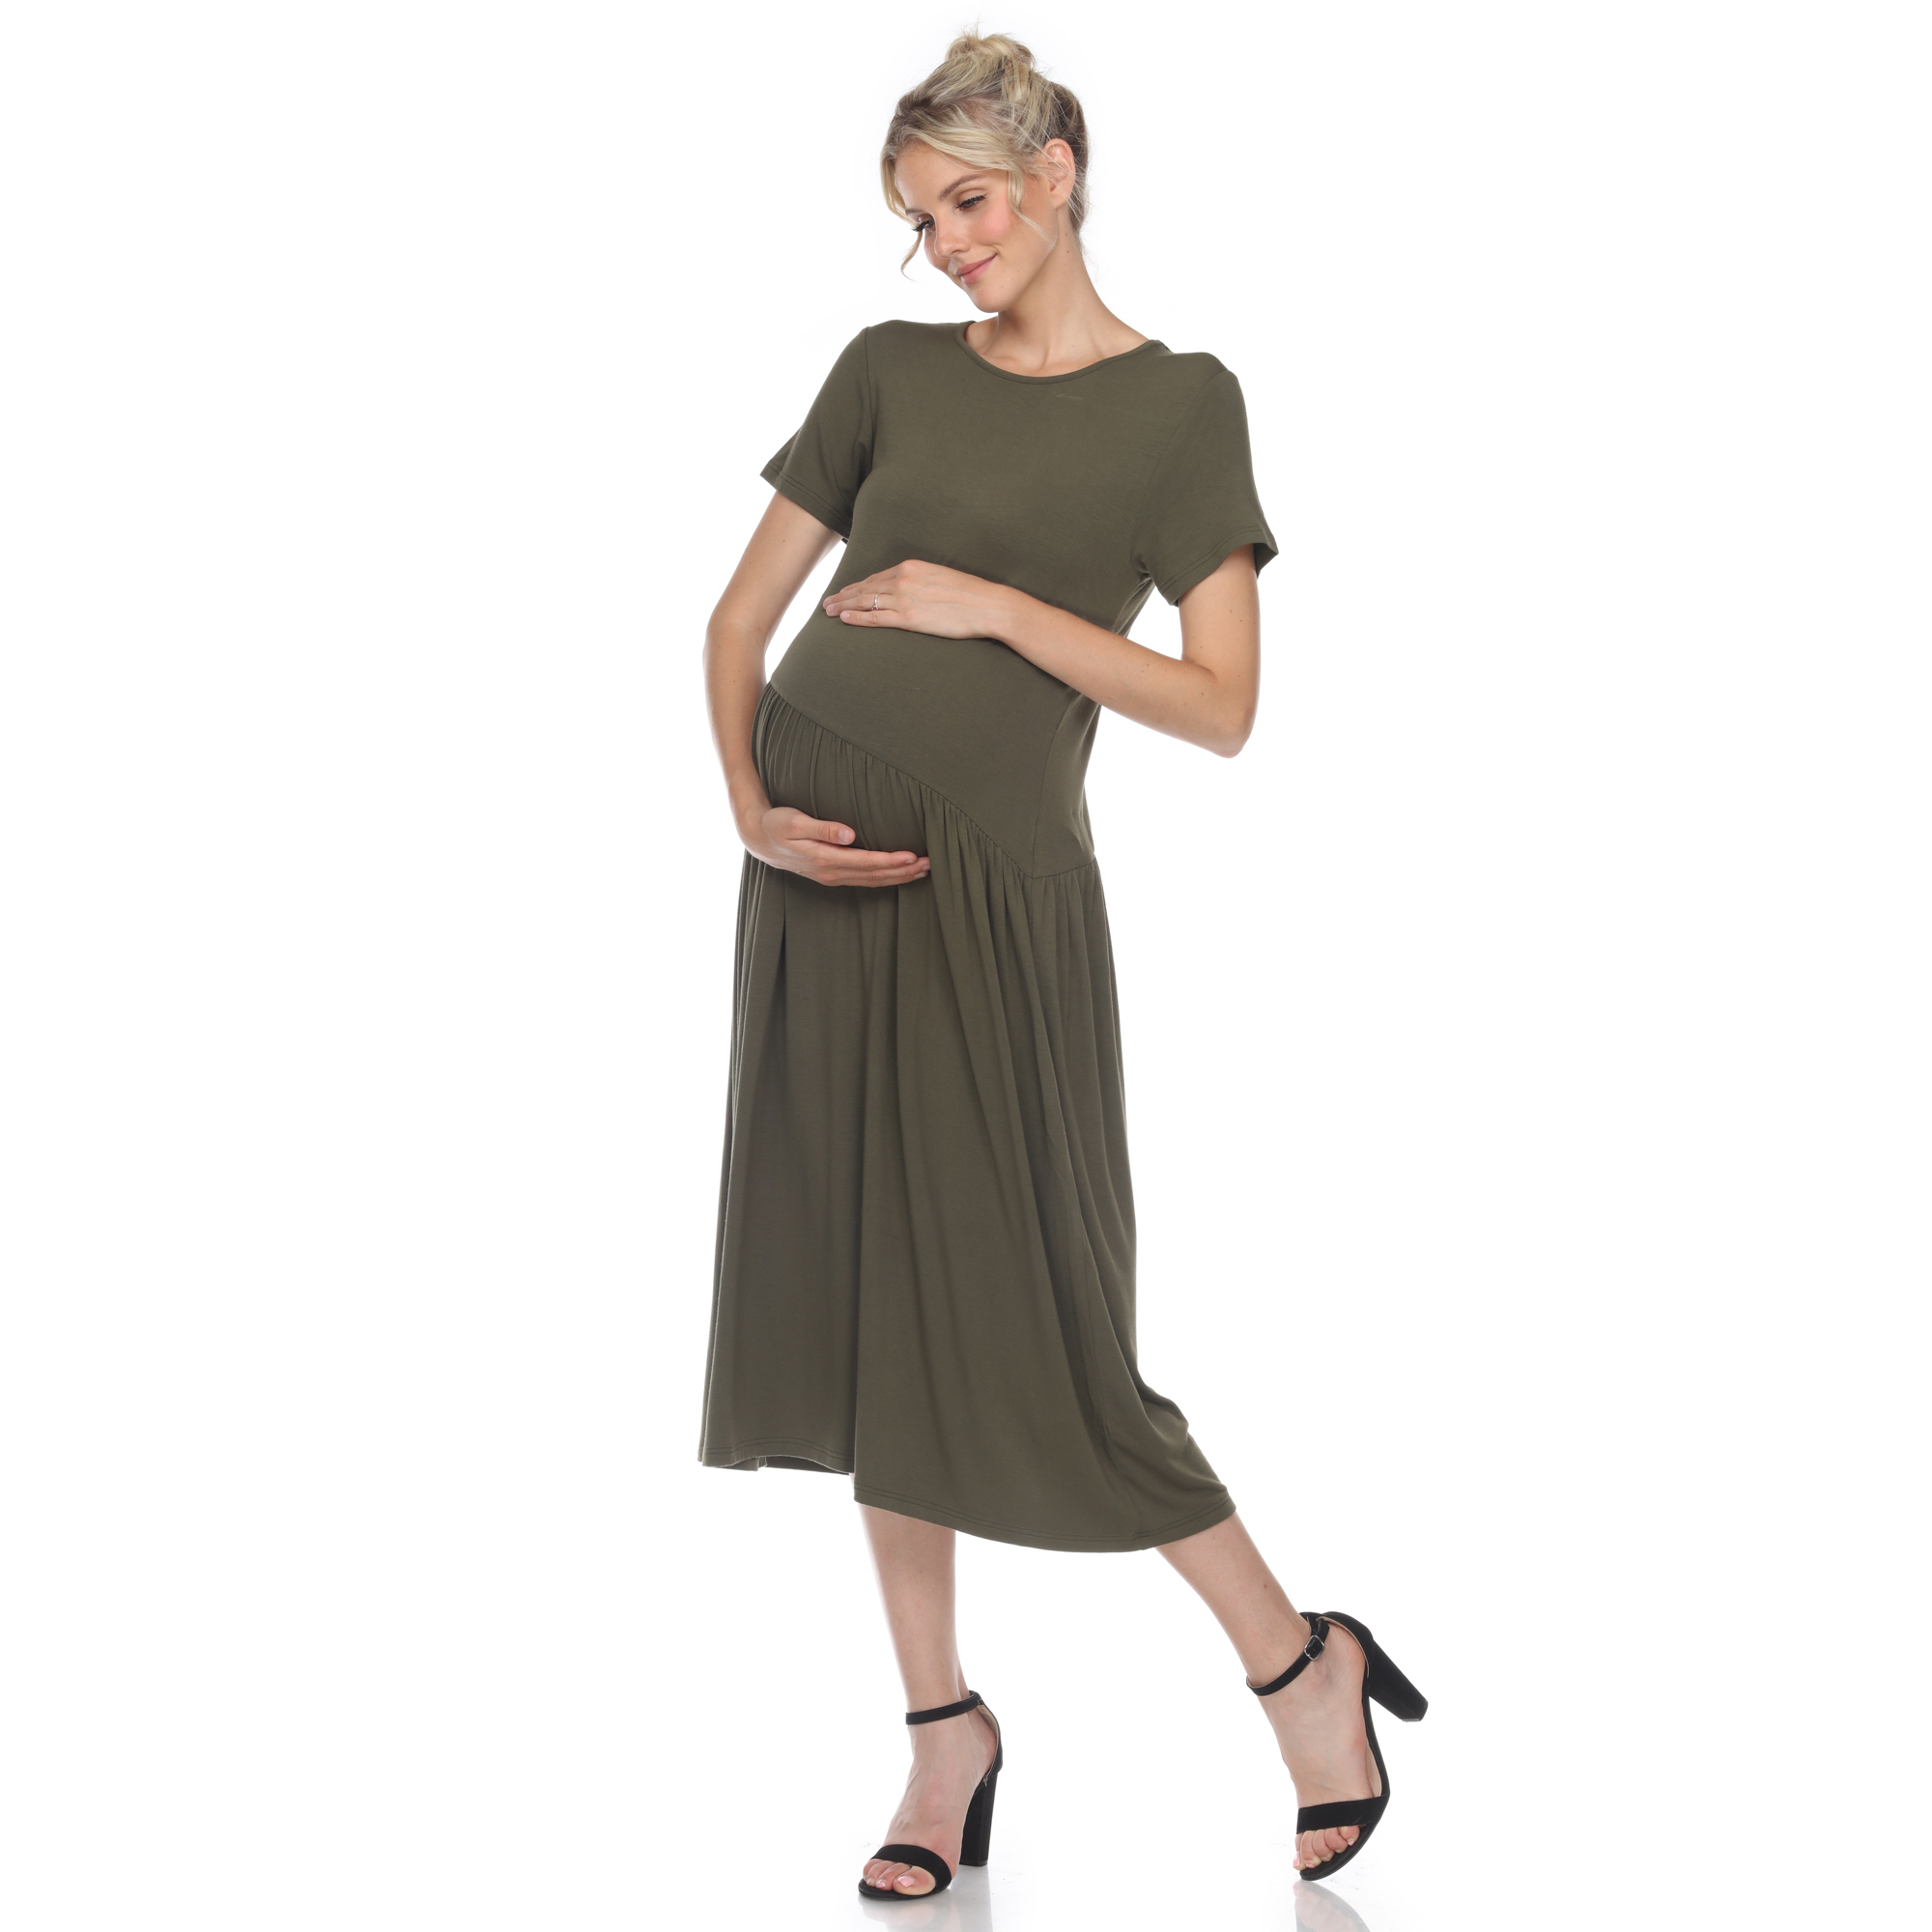 White Mark Womenâs Maternity Short Sleeve Maxi Dress - Olive, Small